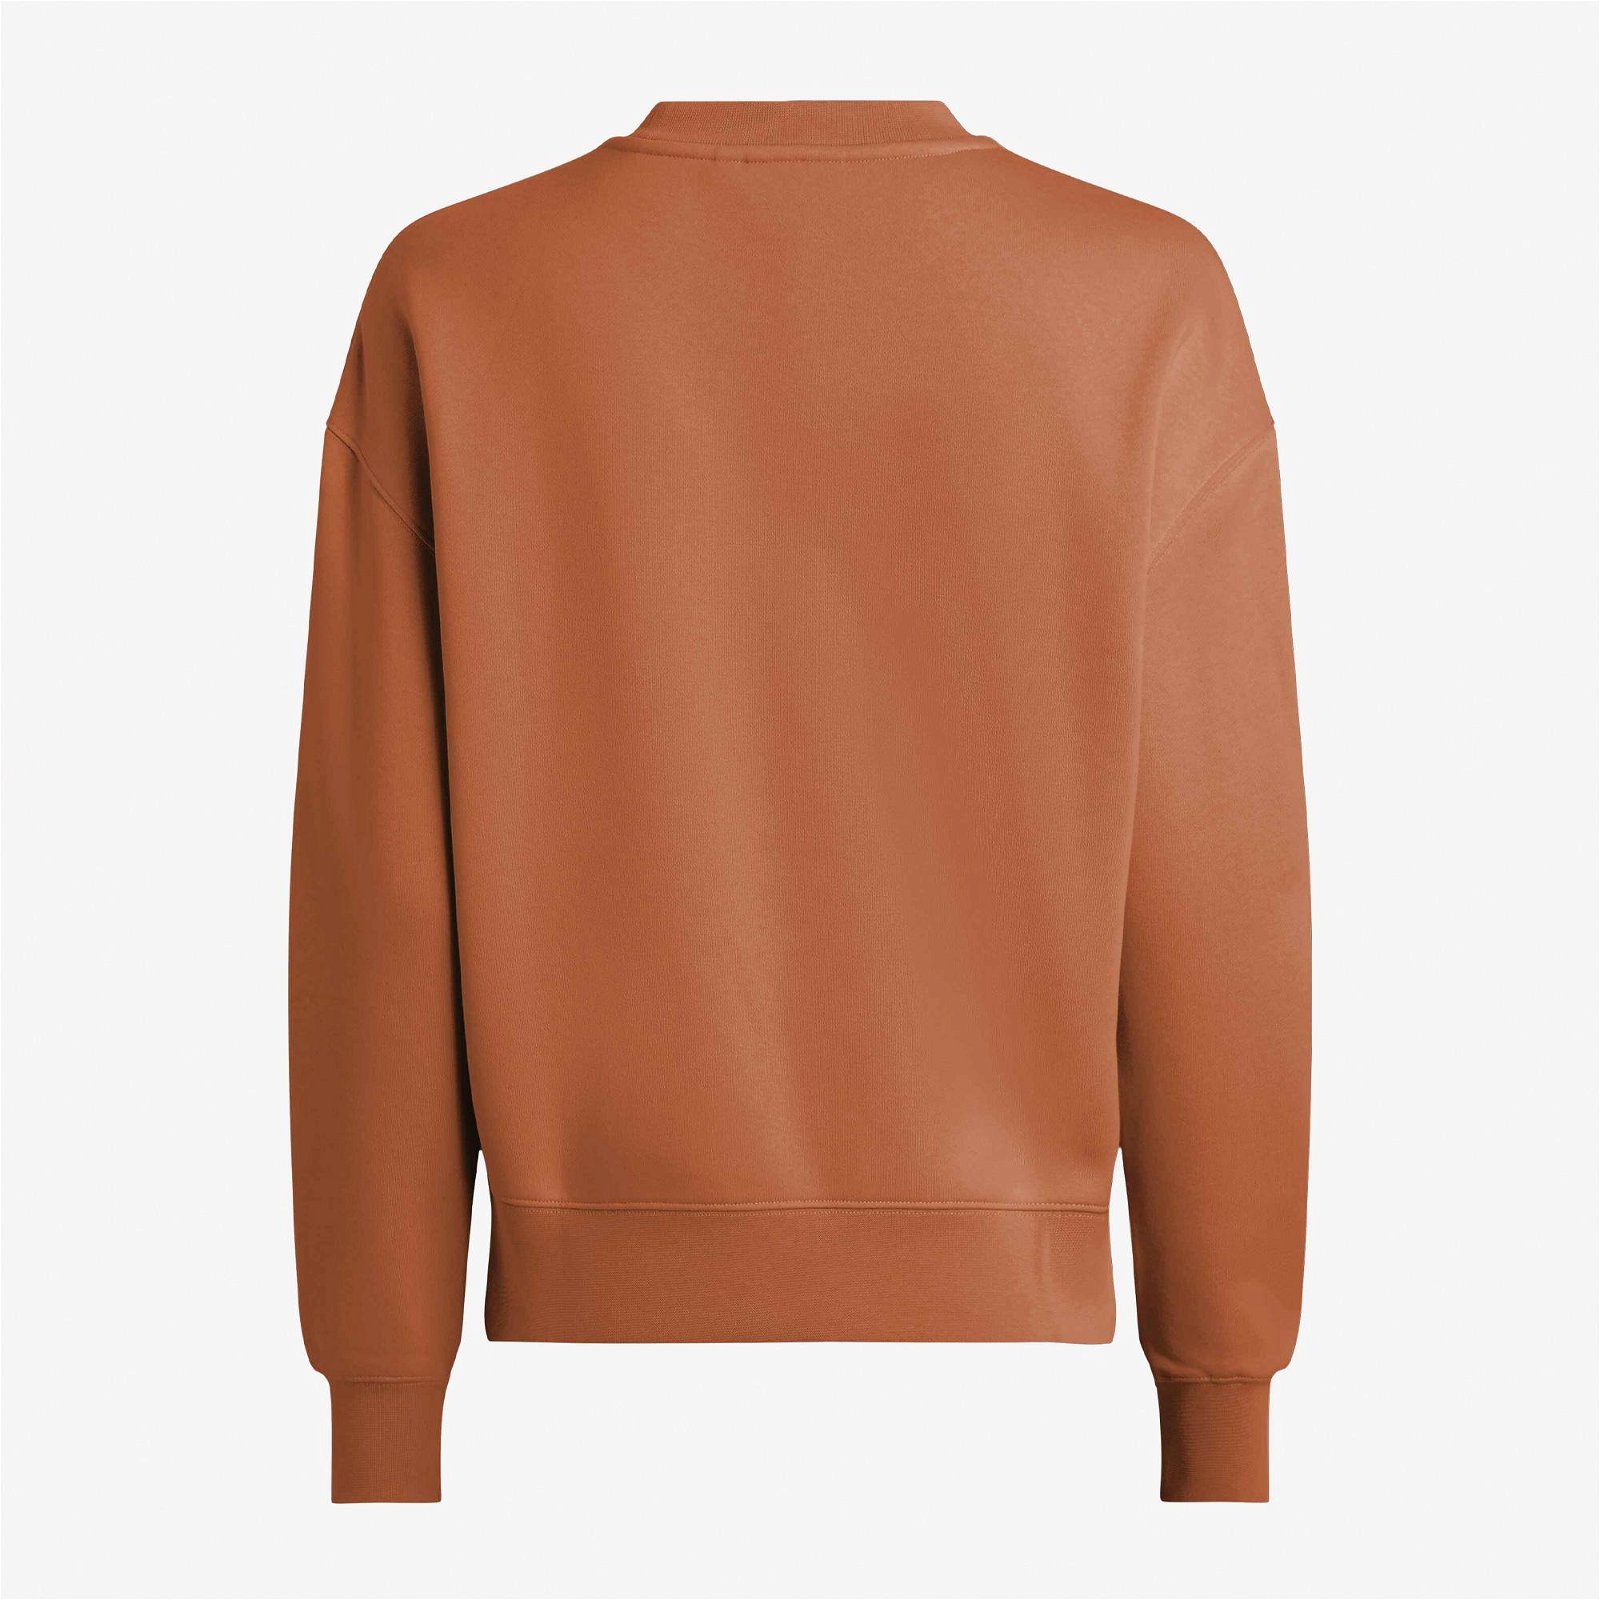 Calvin Klein Kadın Kahverengi Sweatshirt